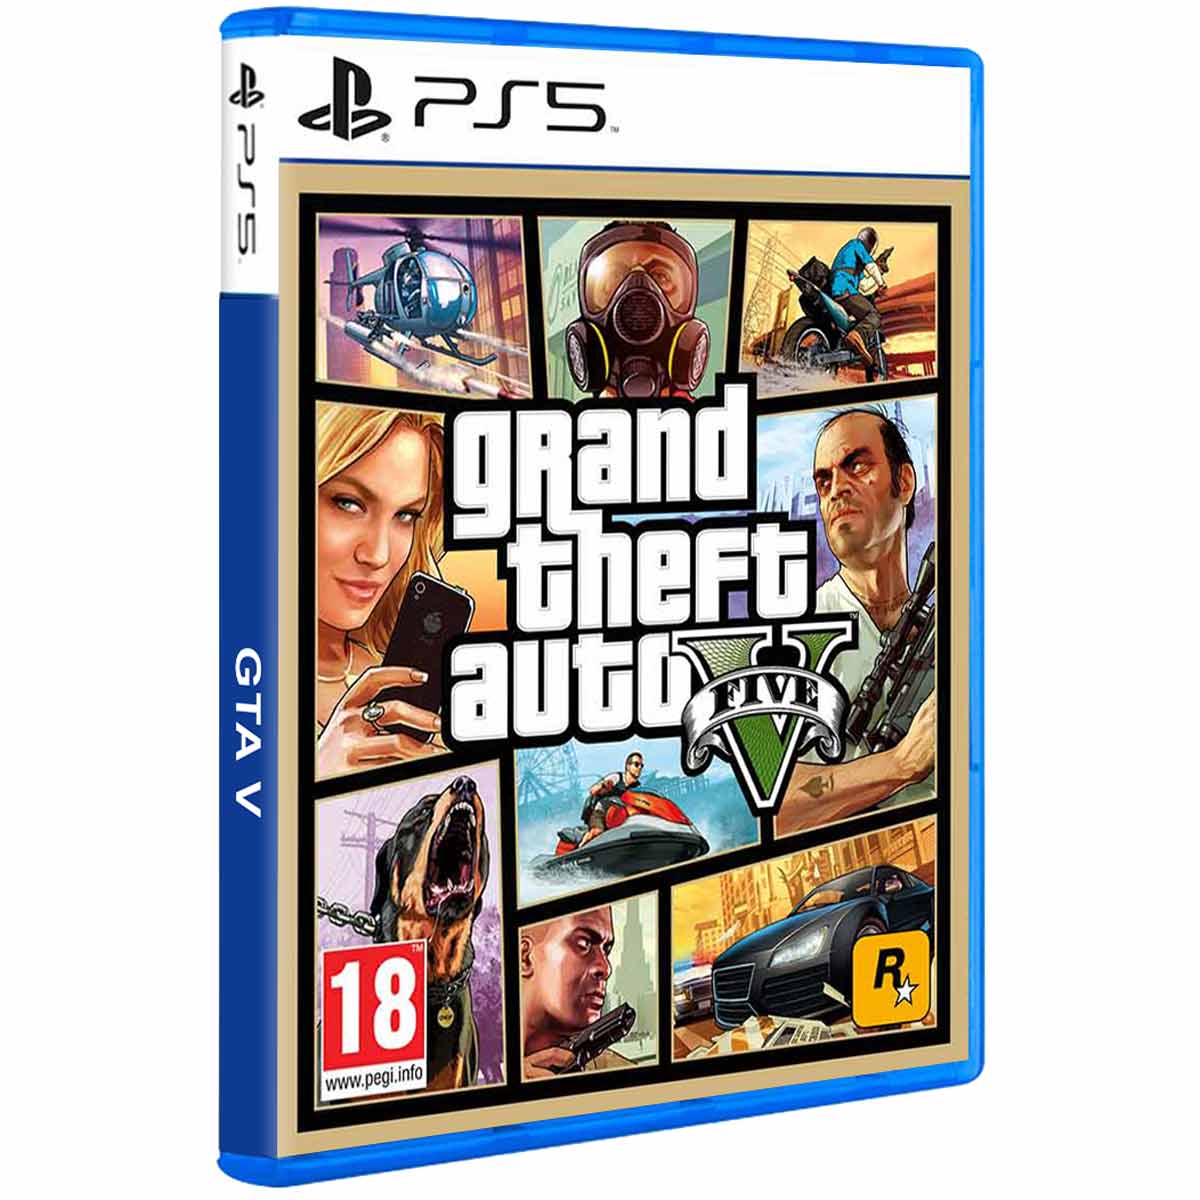 GTA V de PS5 custará R$ 53,73 na PS Store por 3 meses